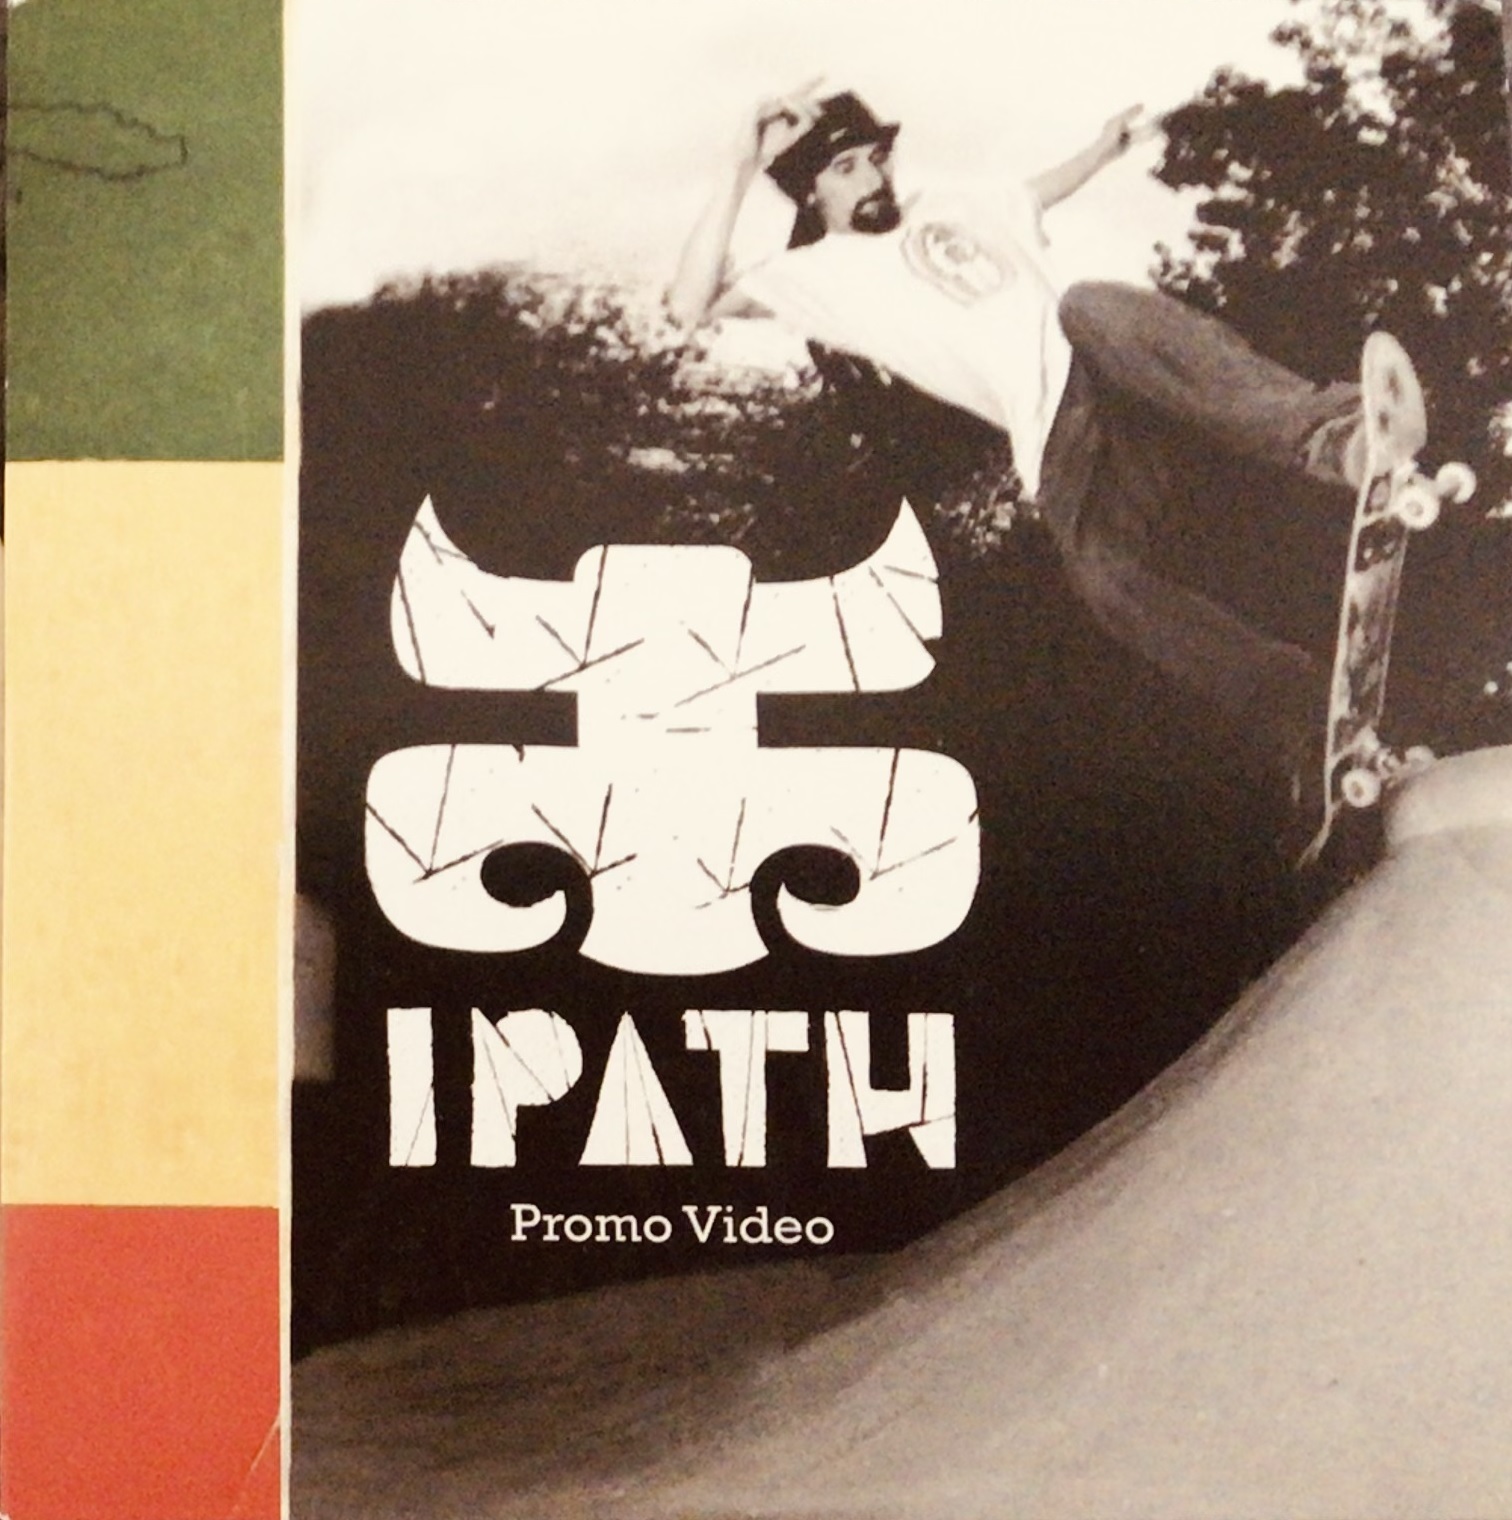 Ipath - Promo cover